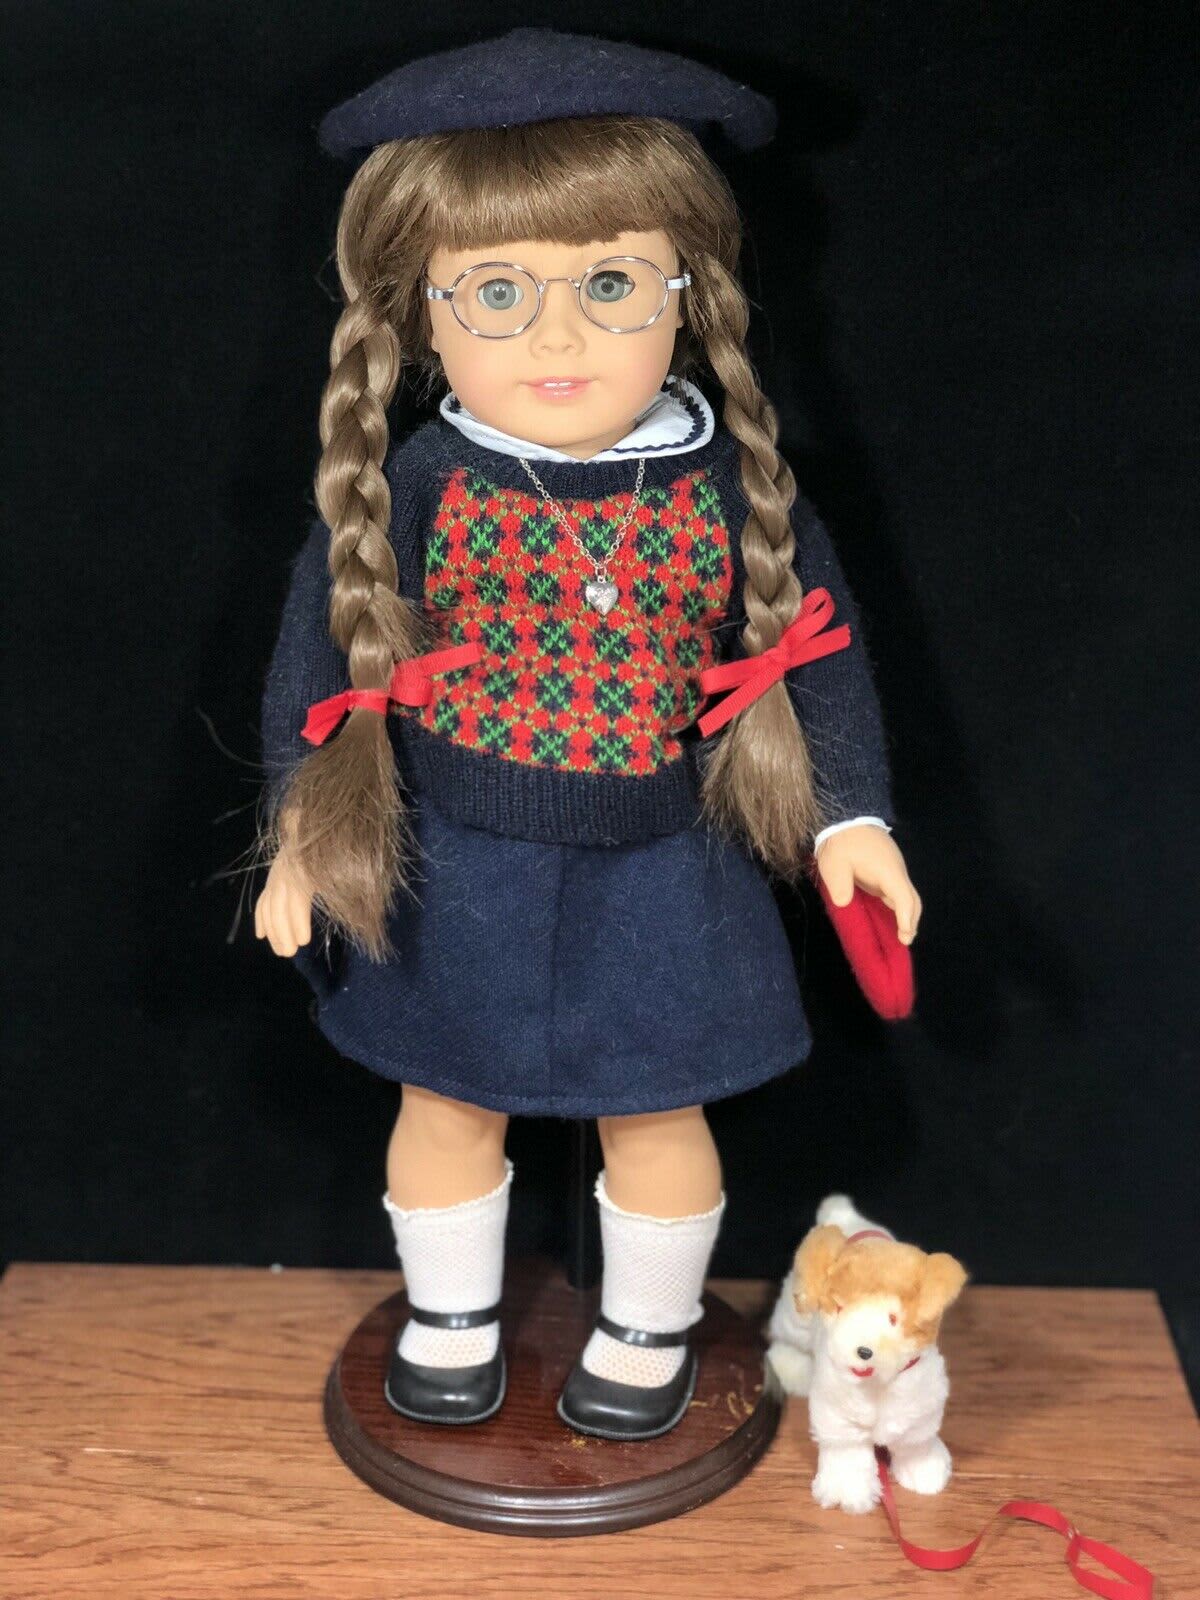 retired american girl dolls worth